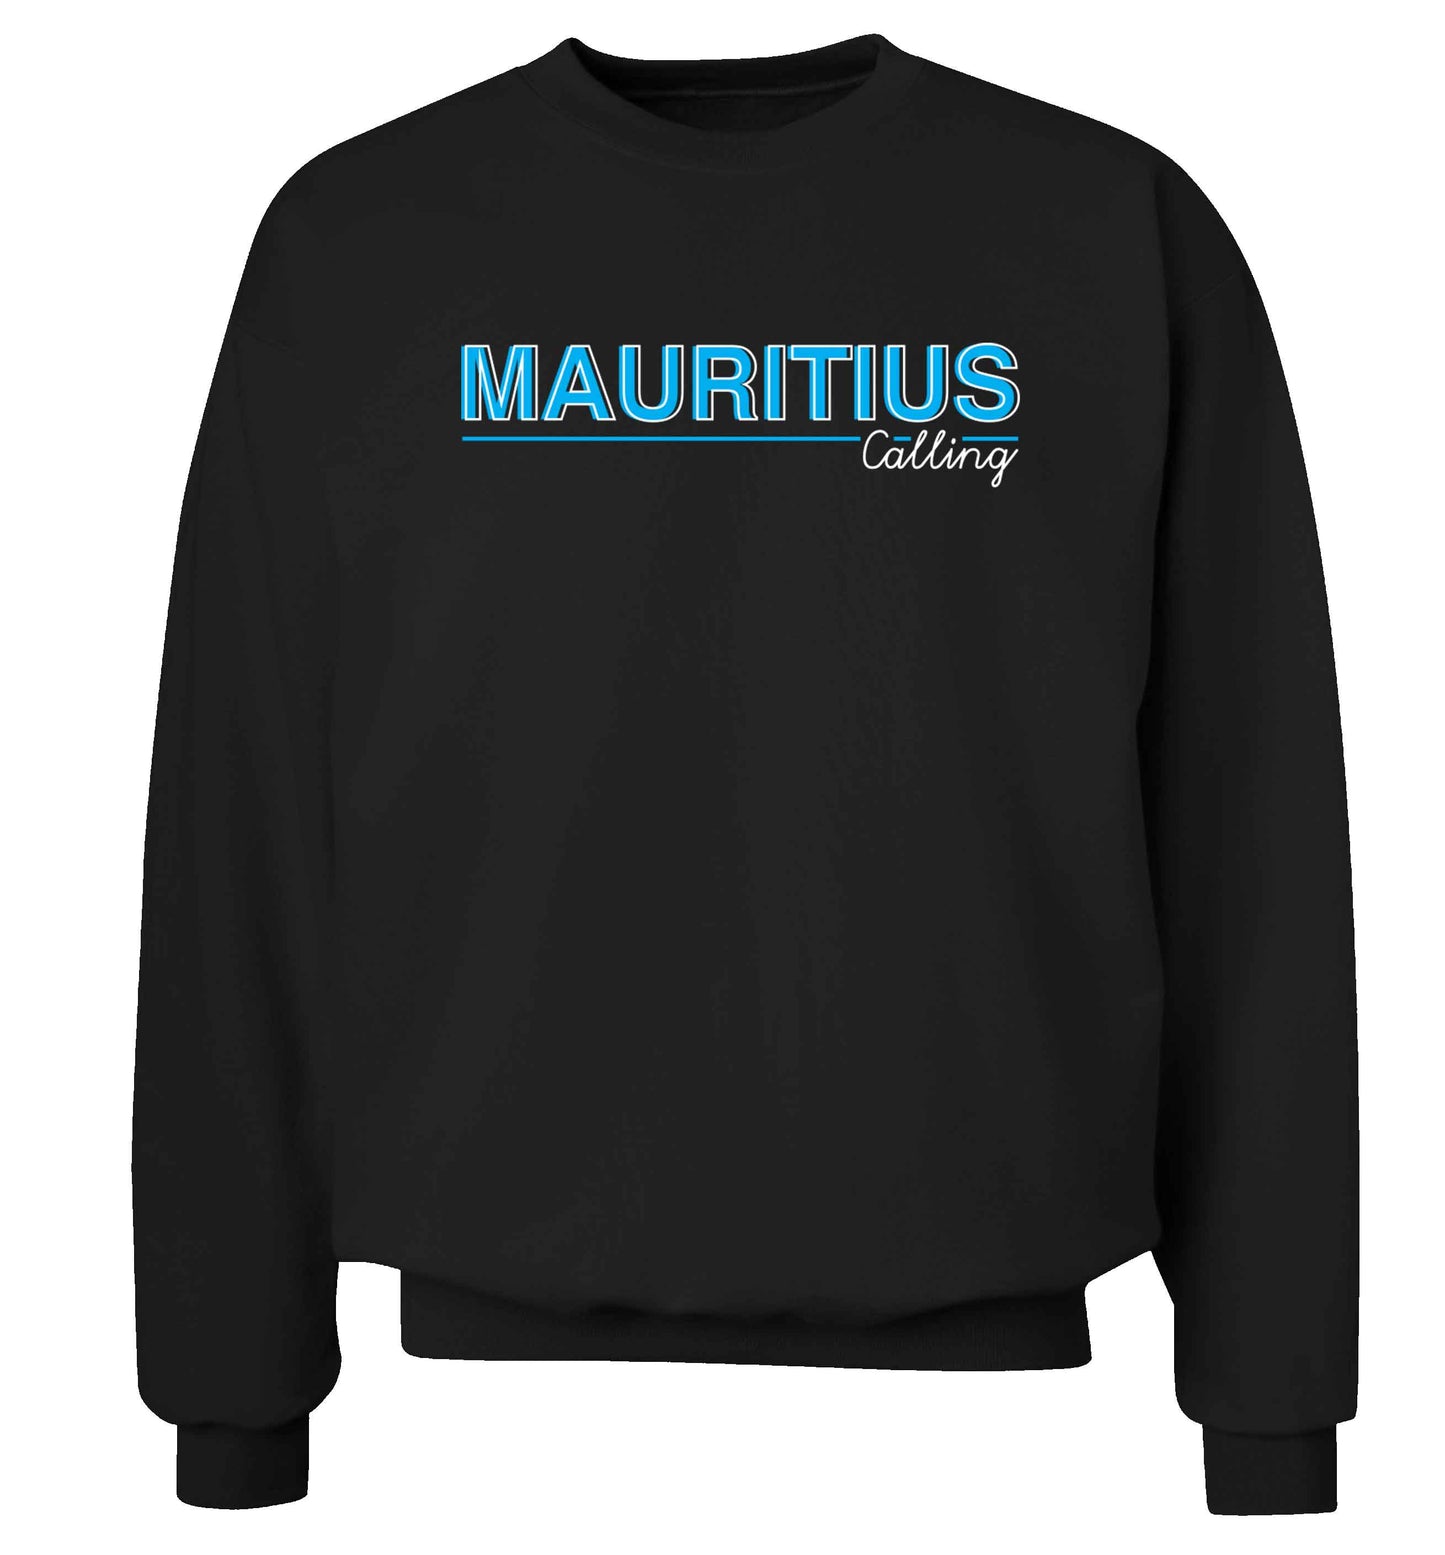 Mauritius calling Adult's unisex black Sweater 2XL